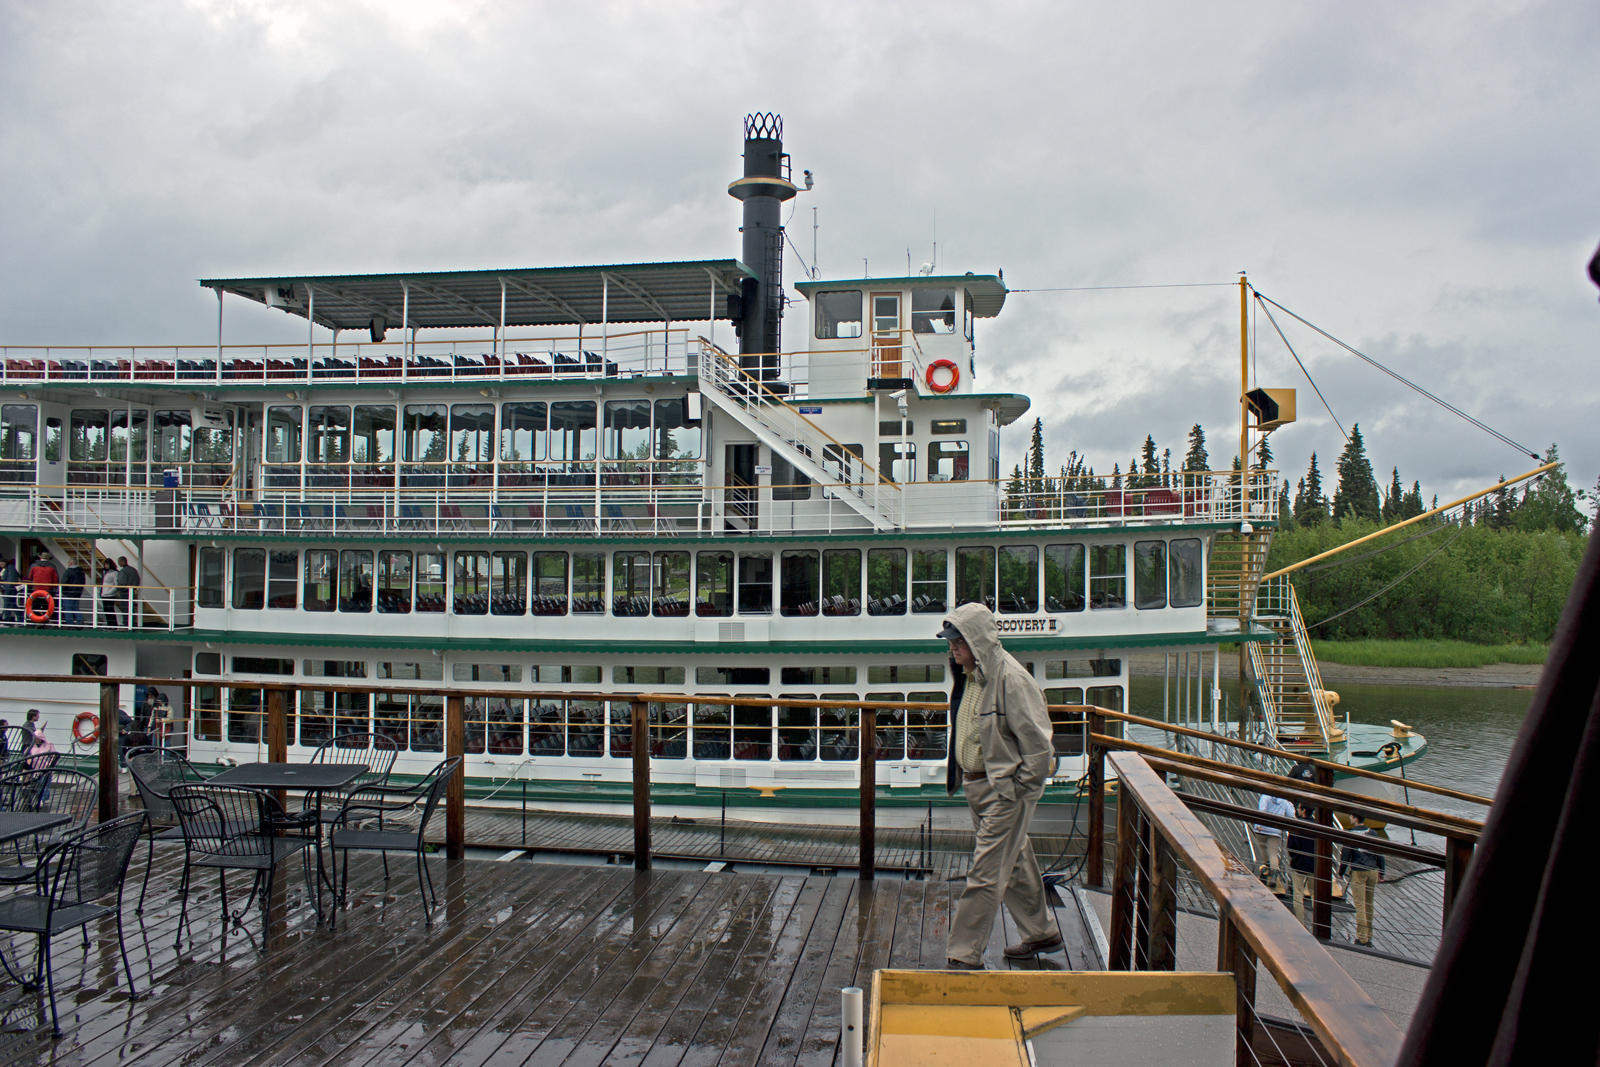 riverboat cruise fairbanks alaska